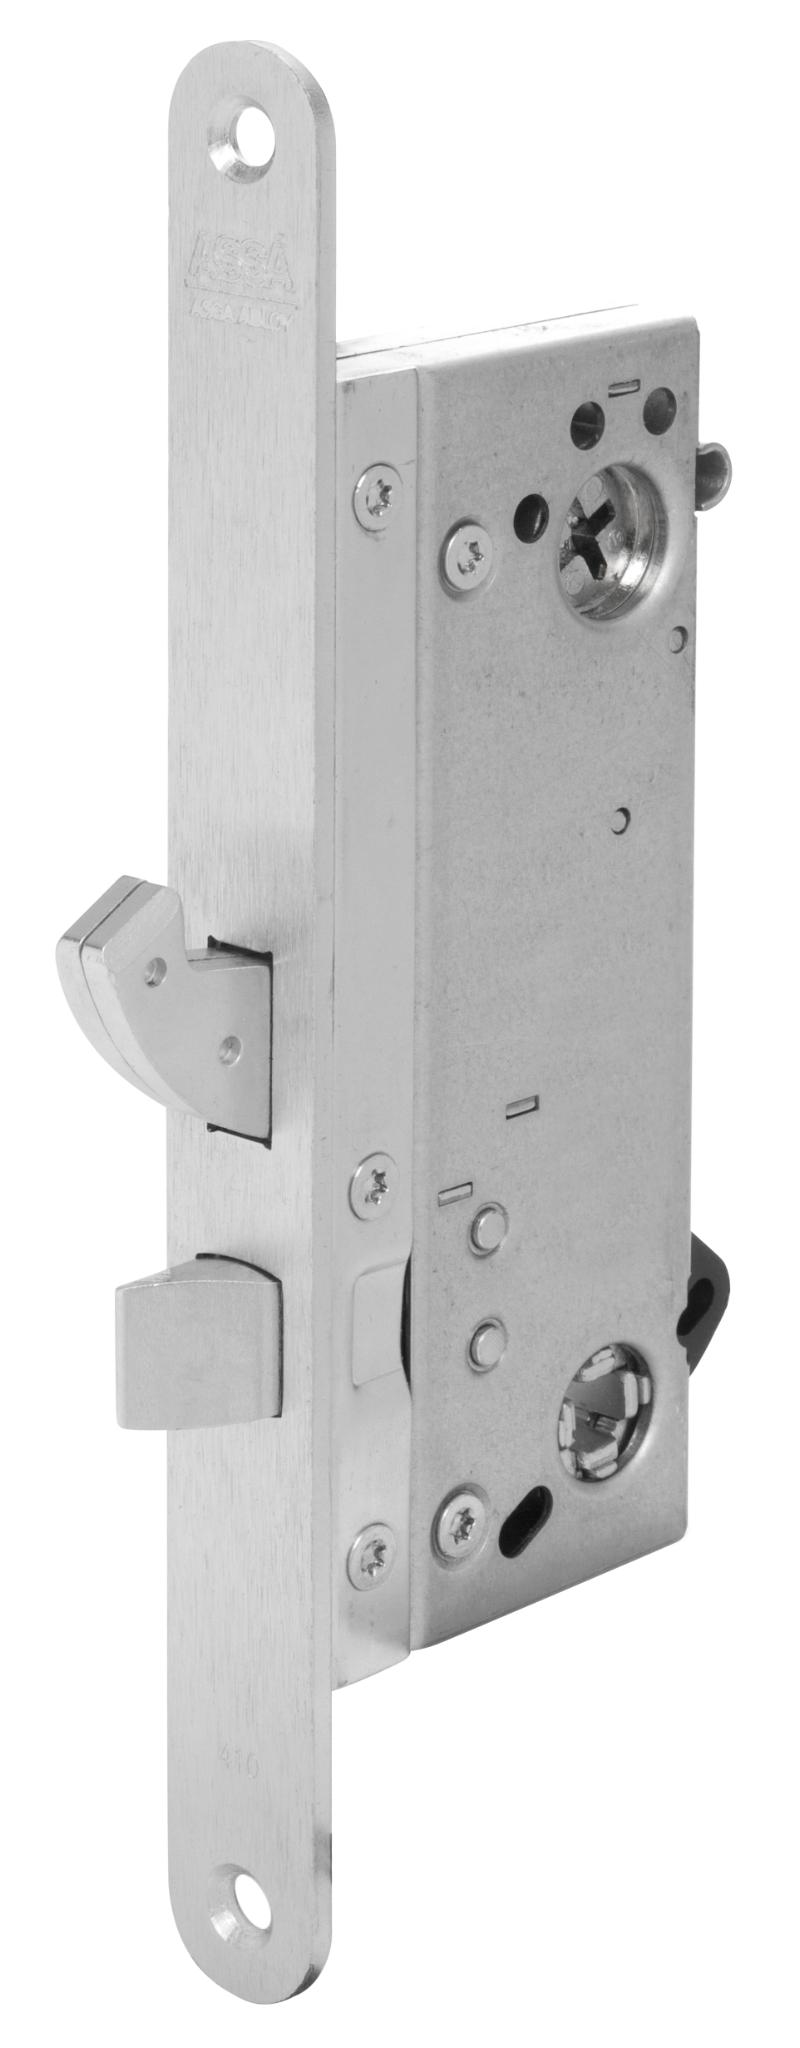 Assa locking box Connect 410/50v reverse. (968431)